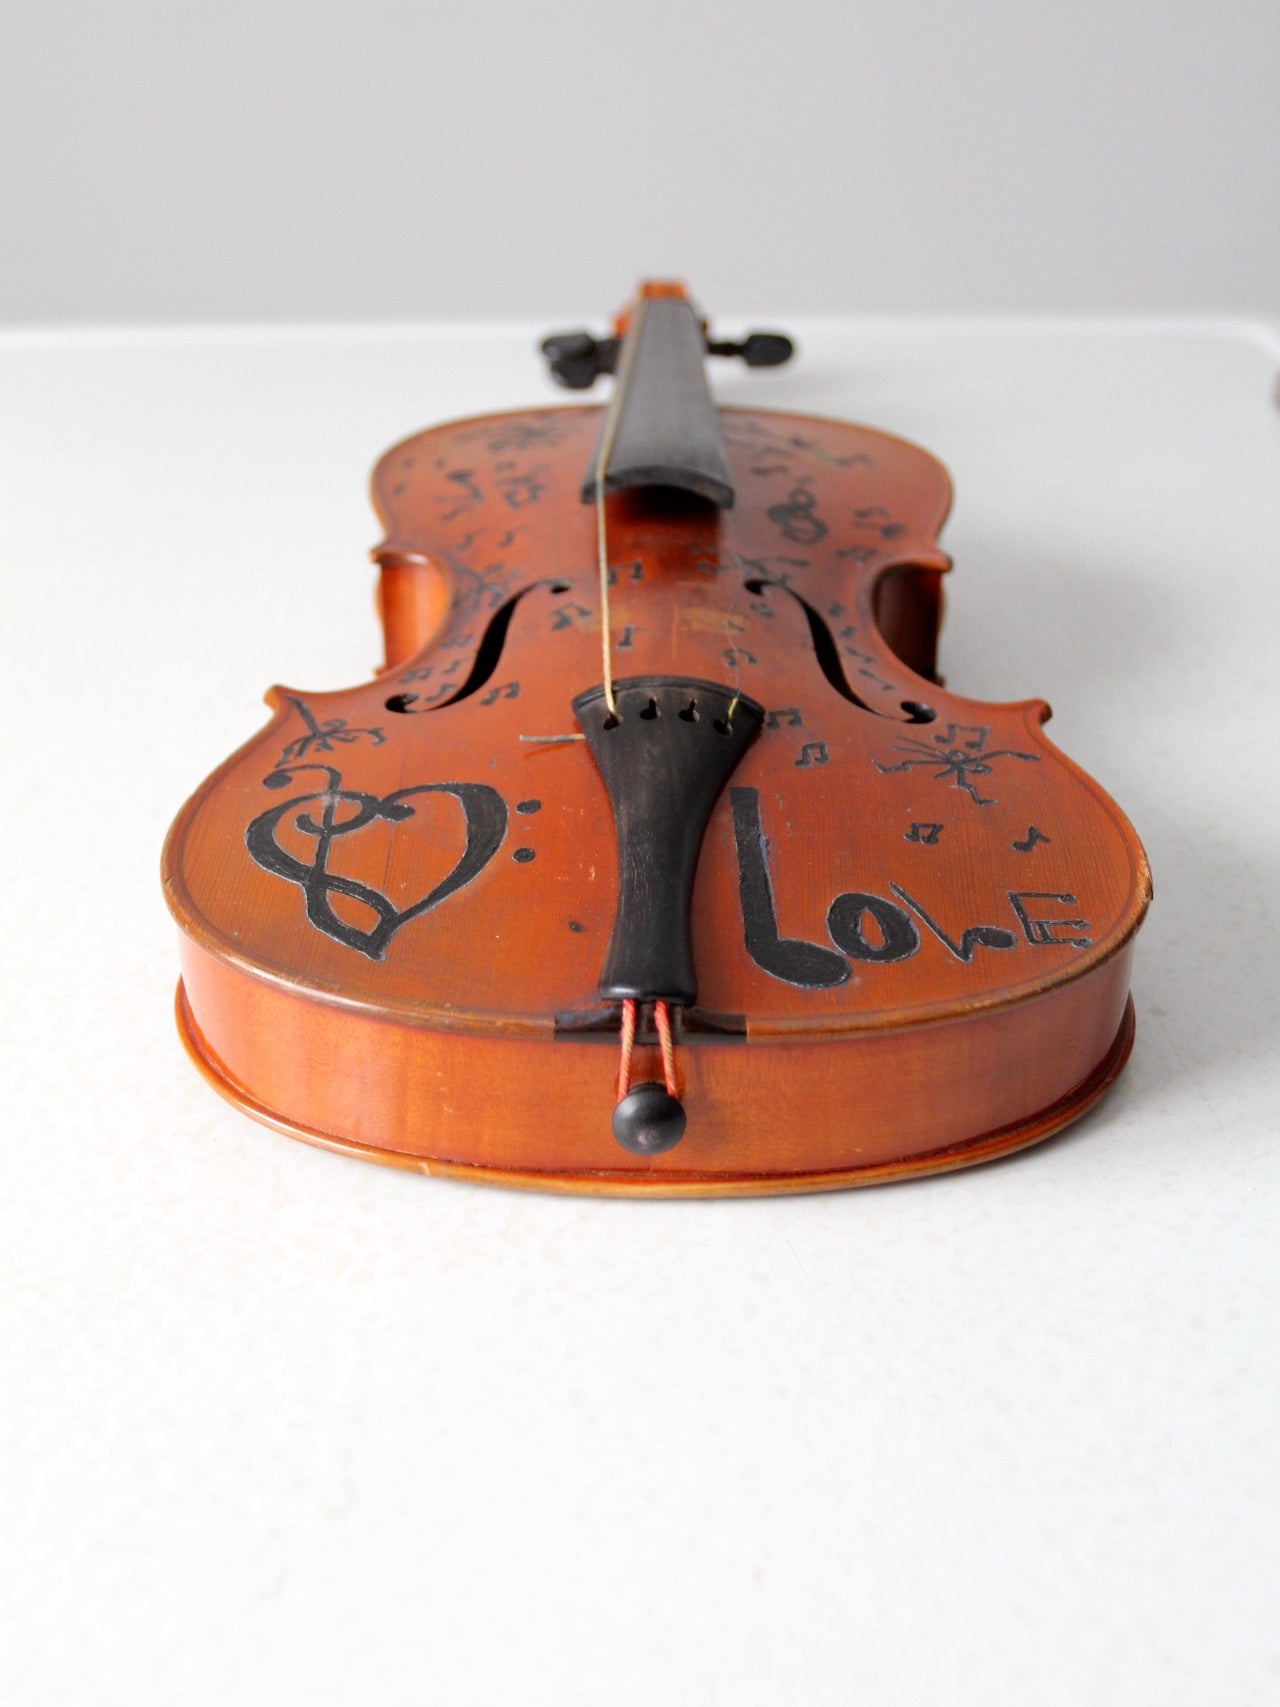 vintage boho art violin